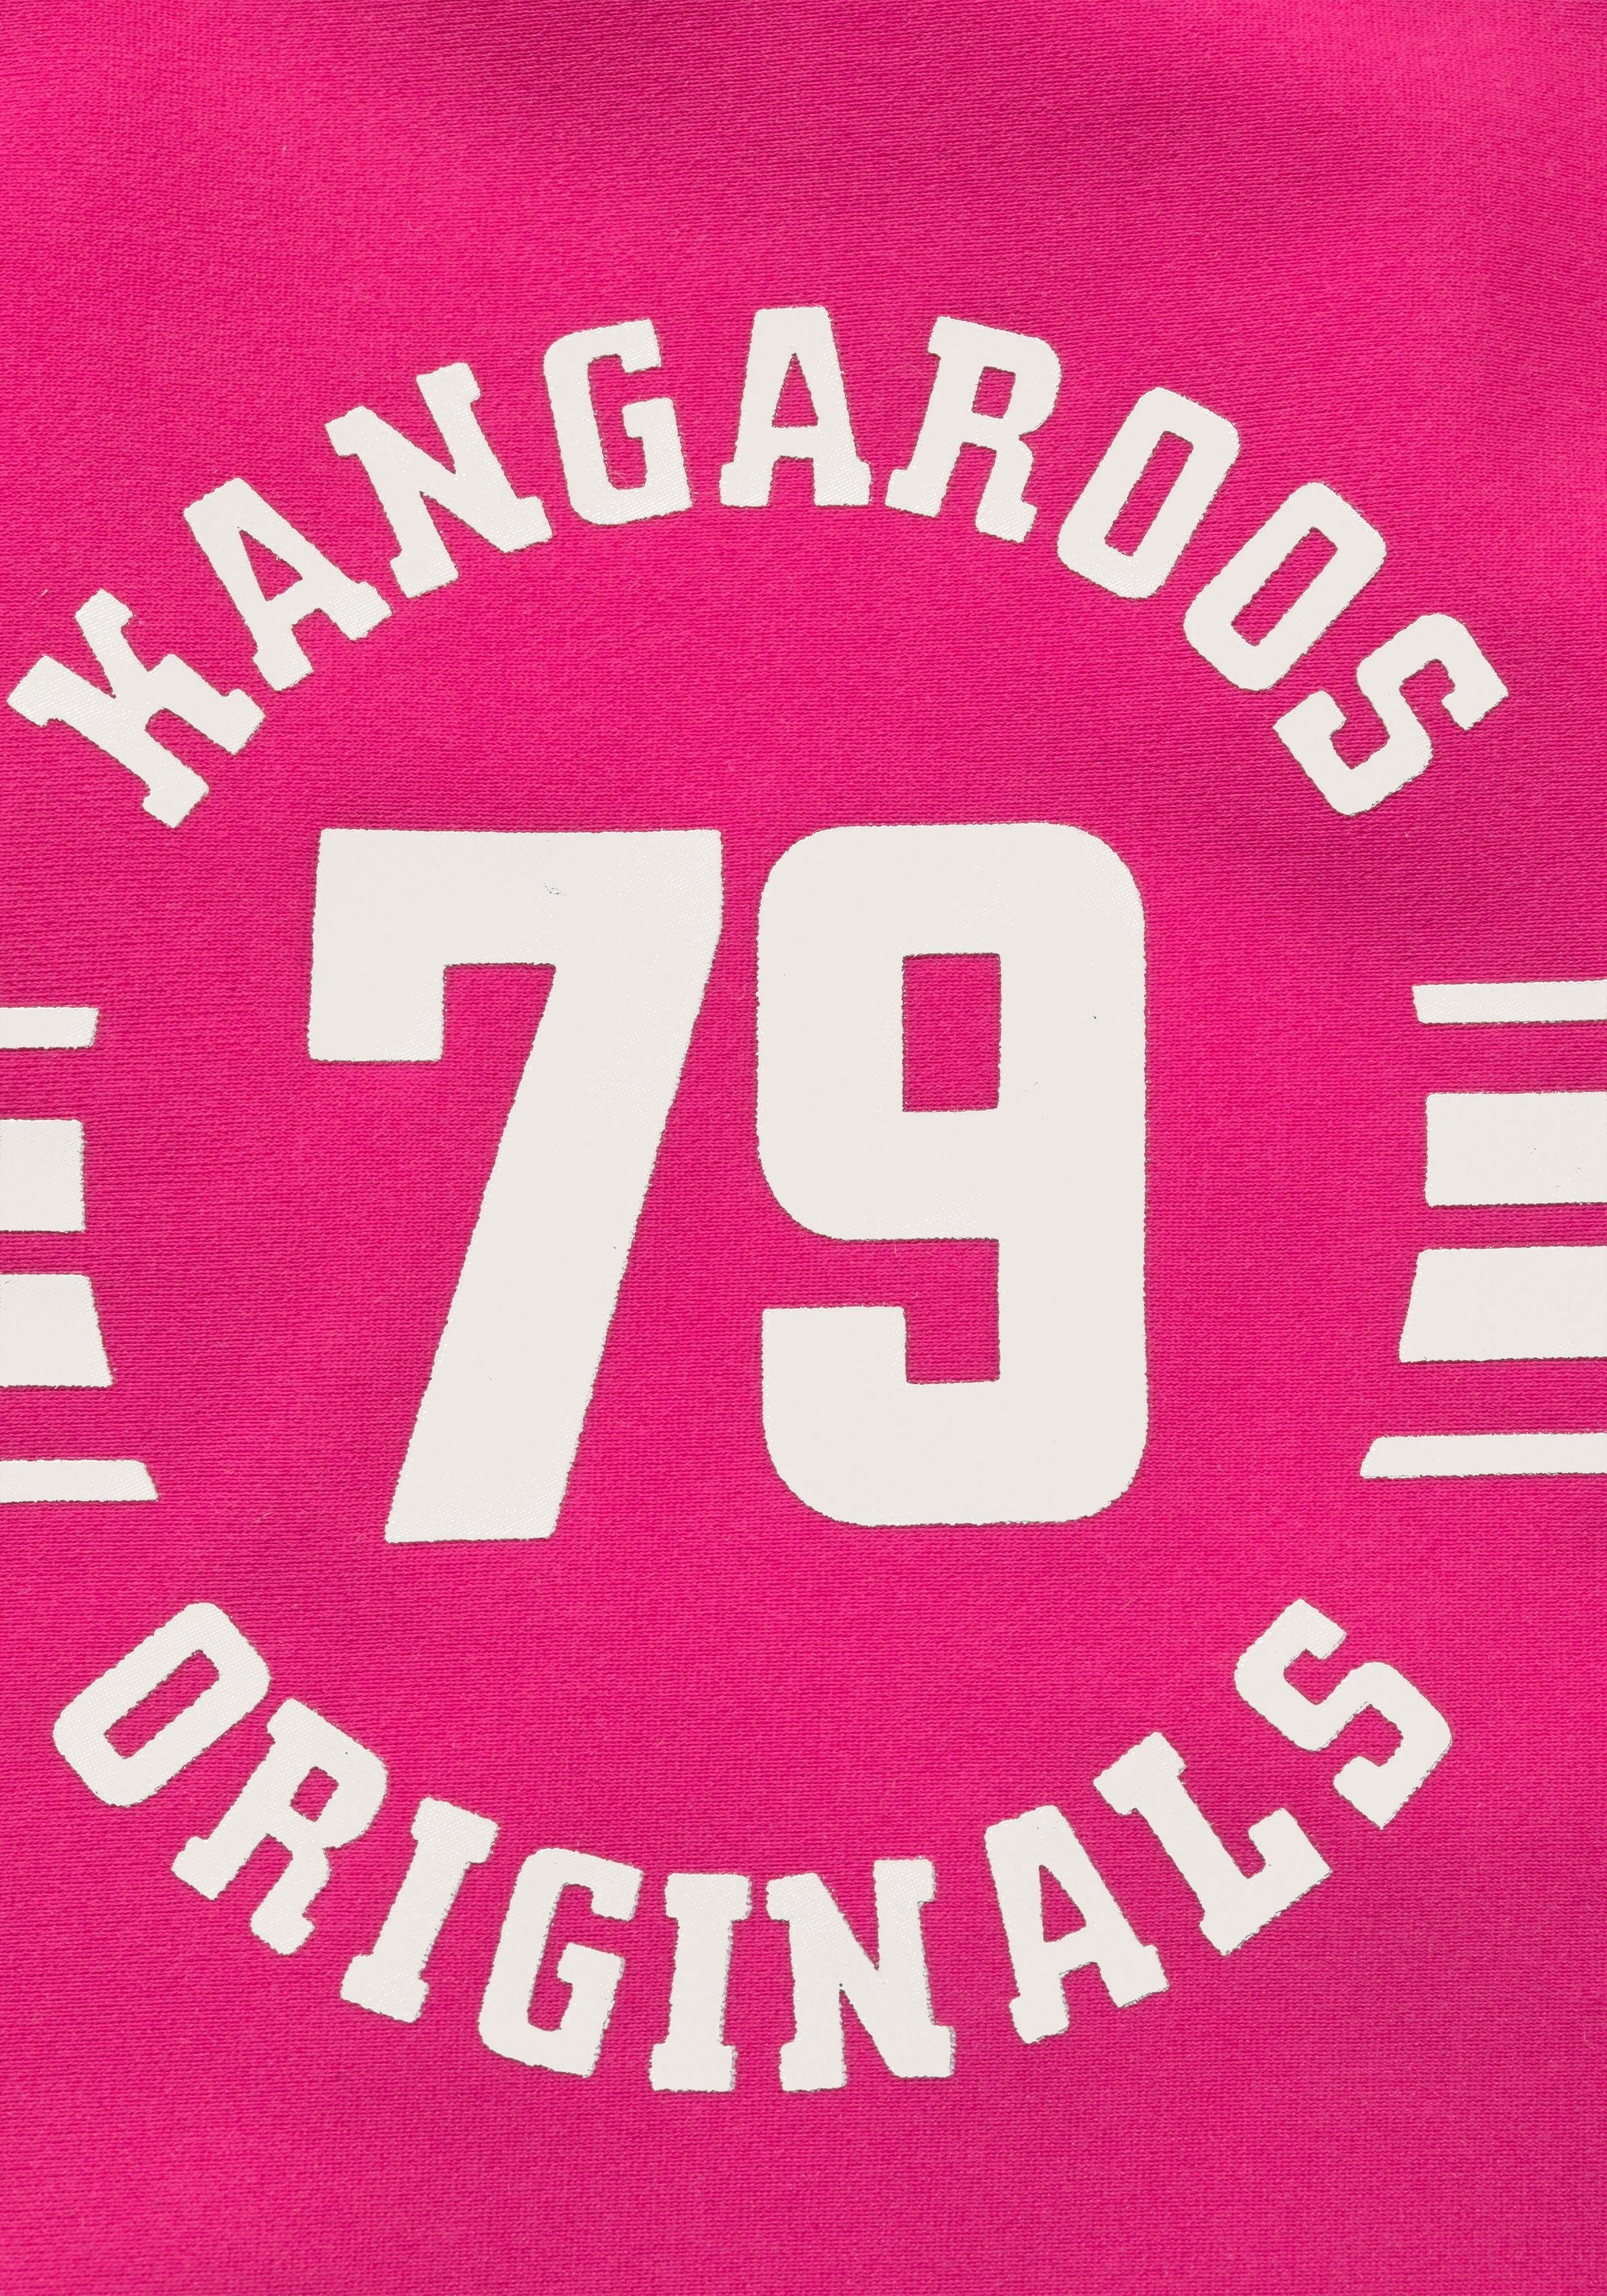 KangaROOS Tankini Sporty mit sportlichem pink Frontdruck